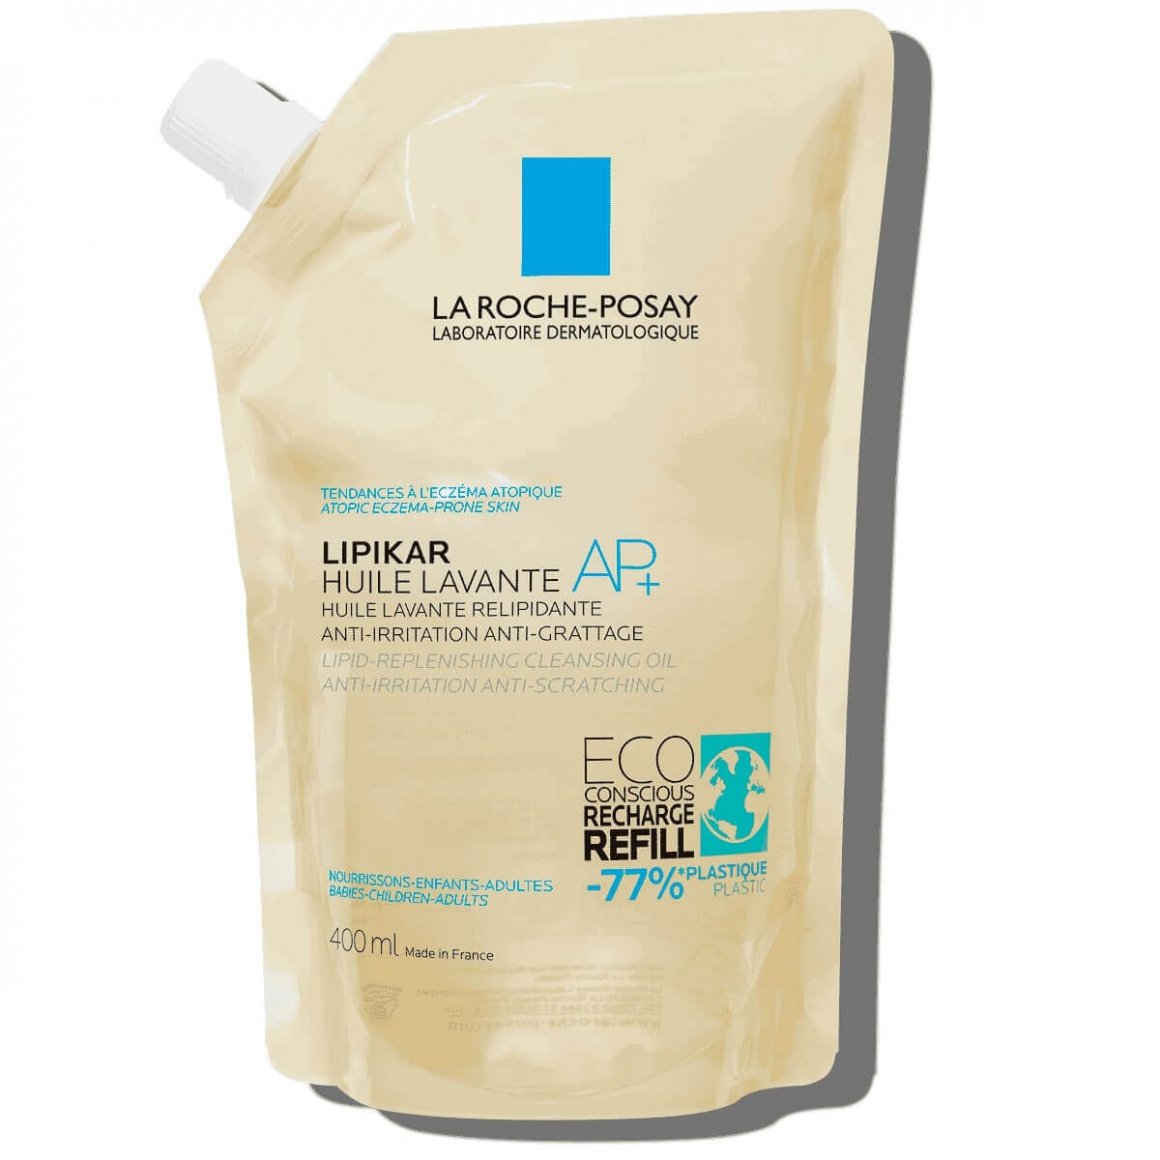 La Roche-Posay Lipikar Eco conscious Refill Cleansing Oil AP 400 ml